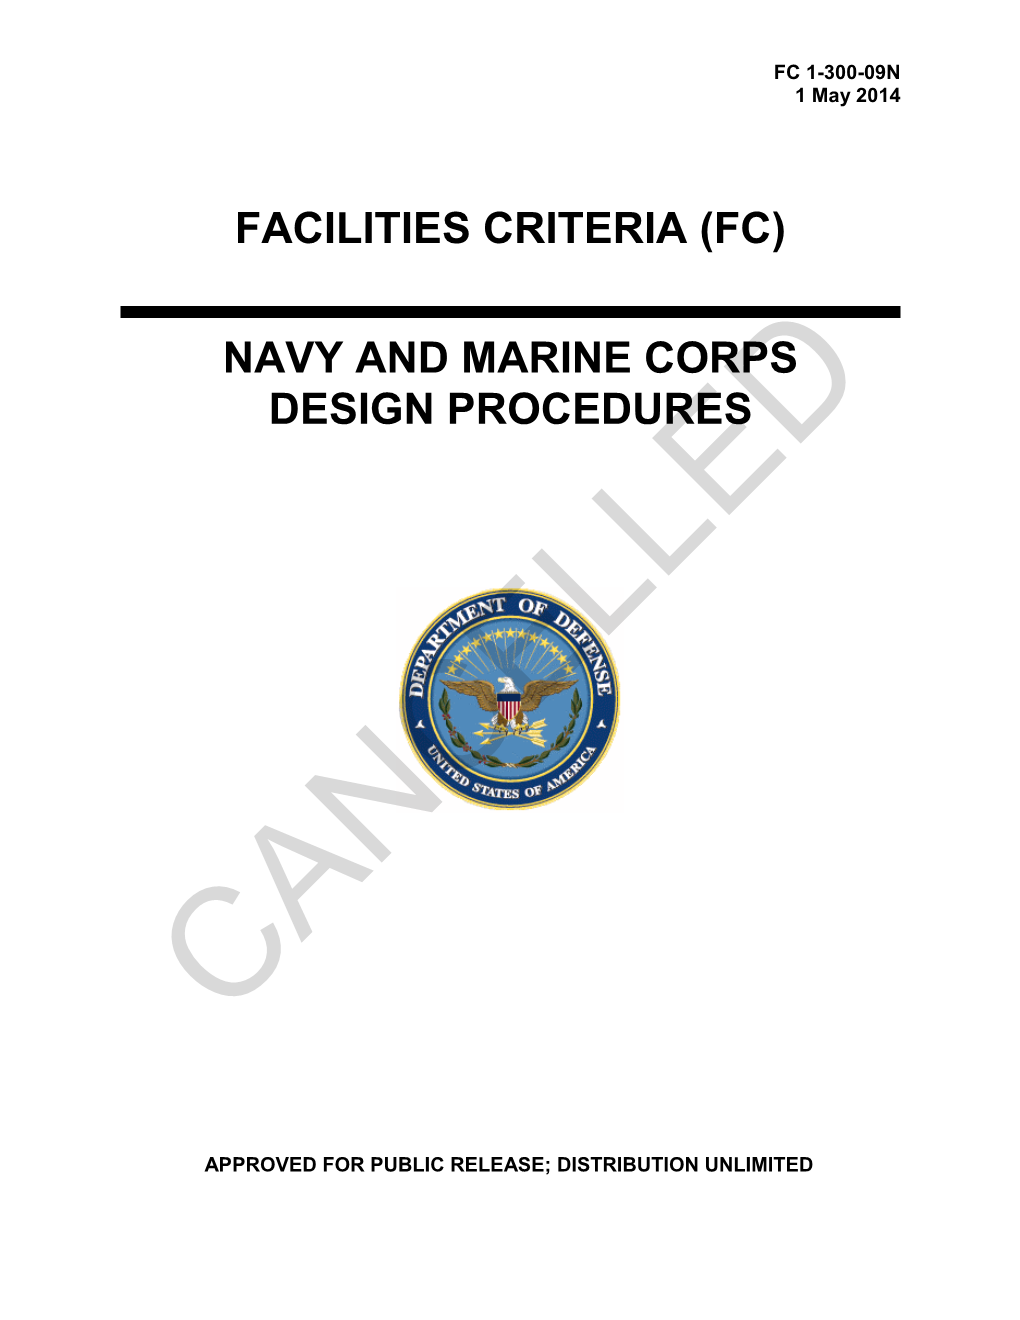 FC 1-300-09N Navy and Marine Corps Design Procedures